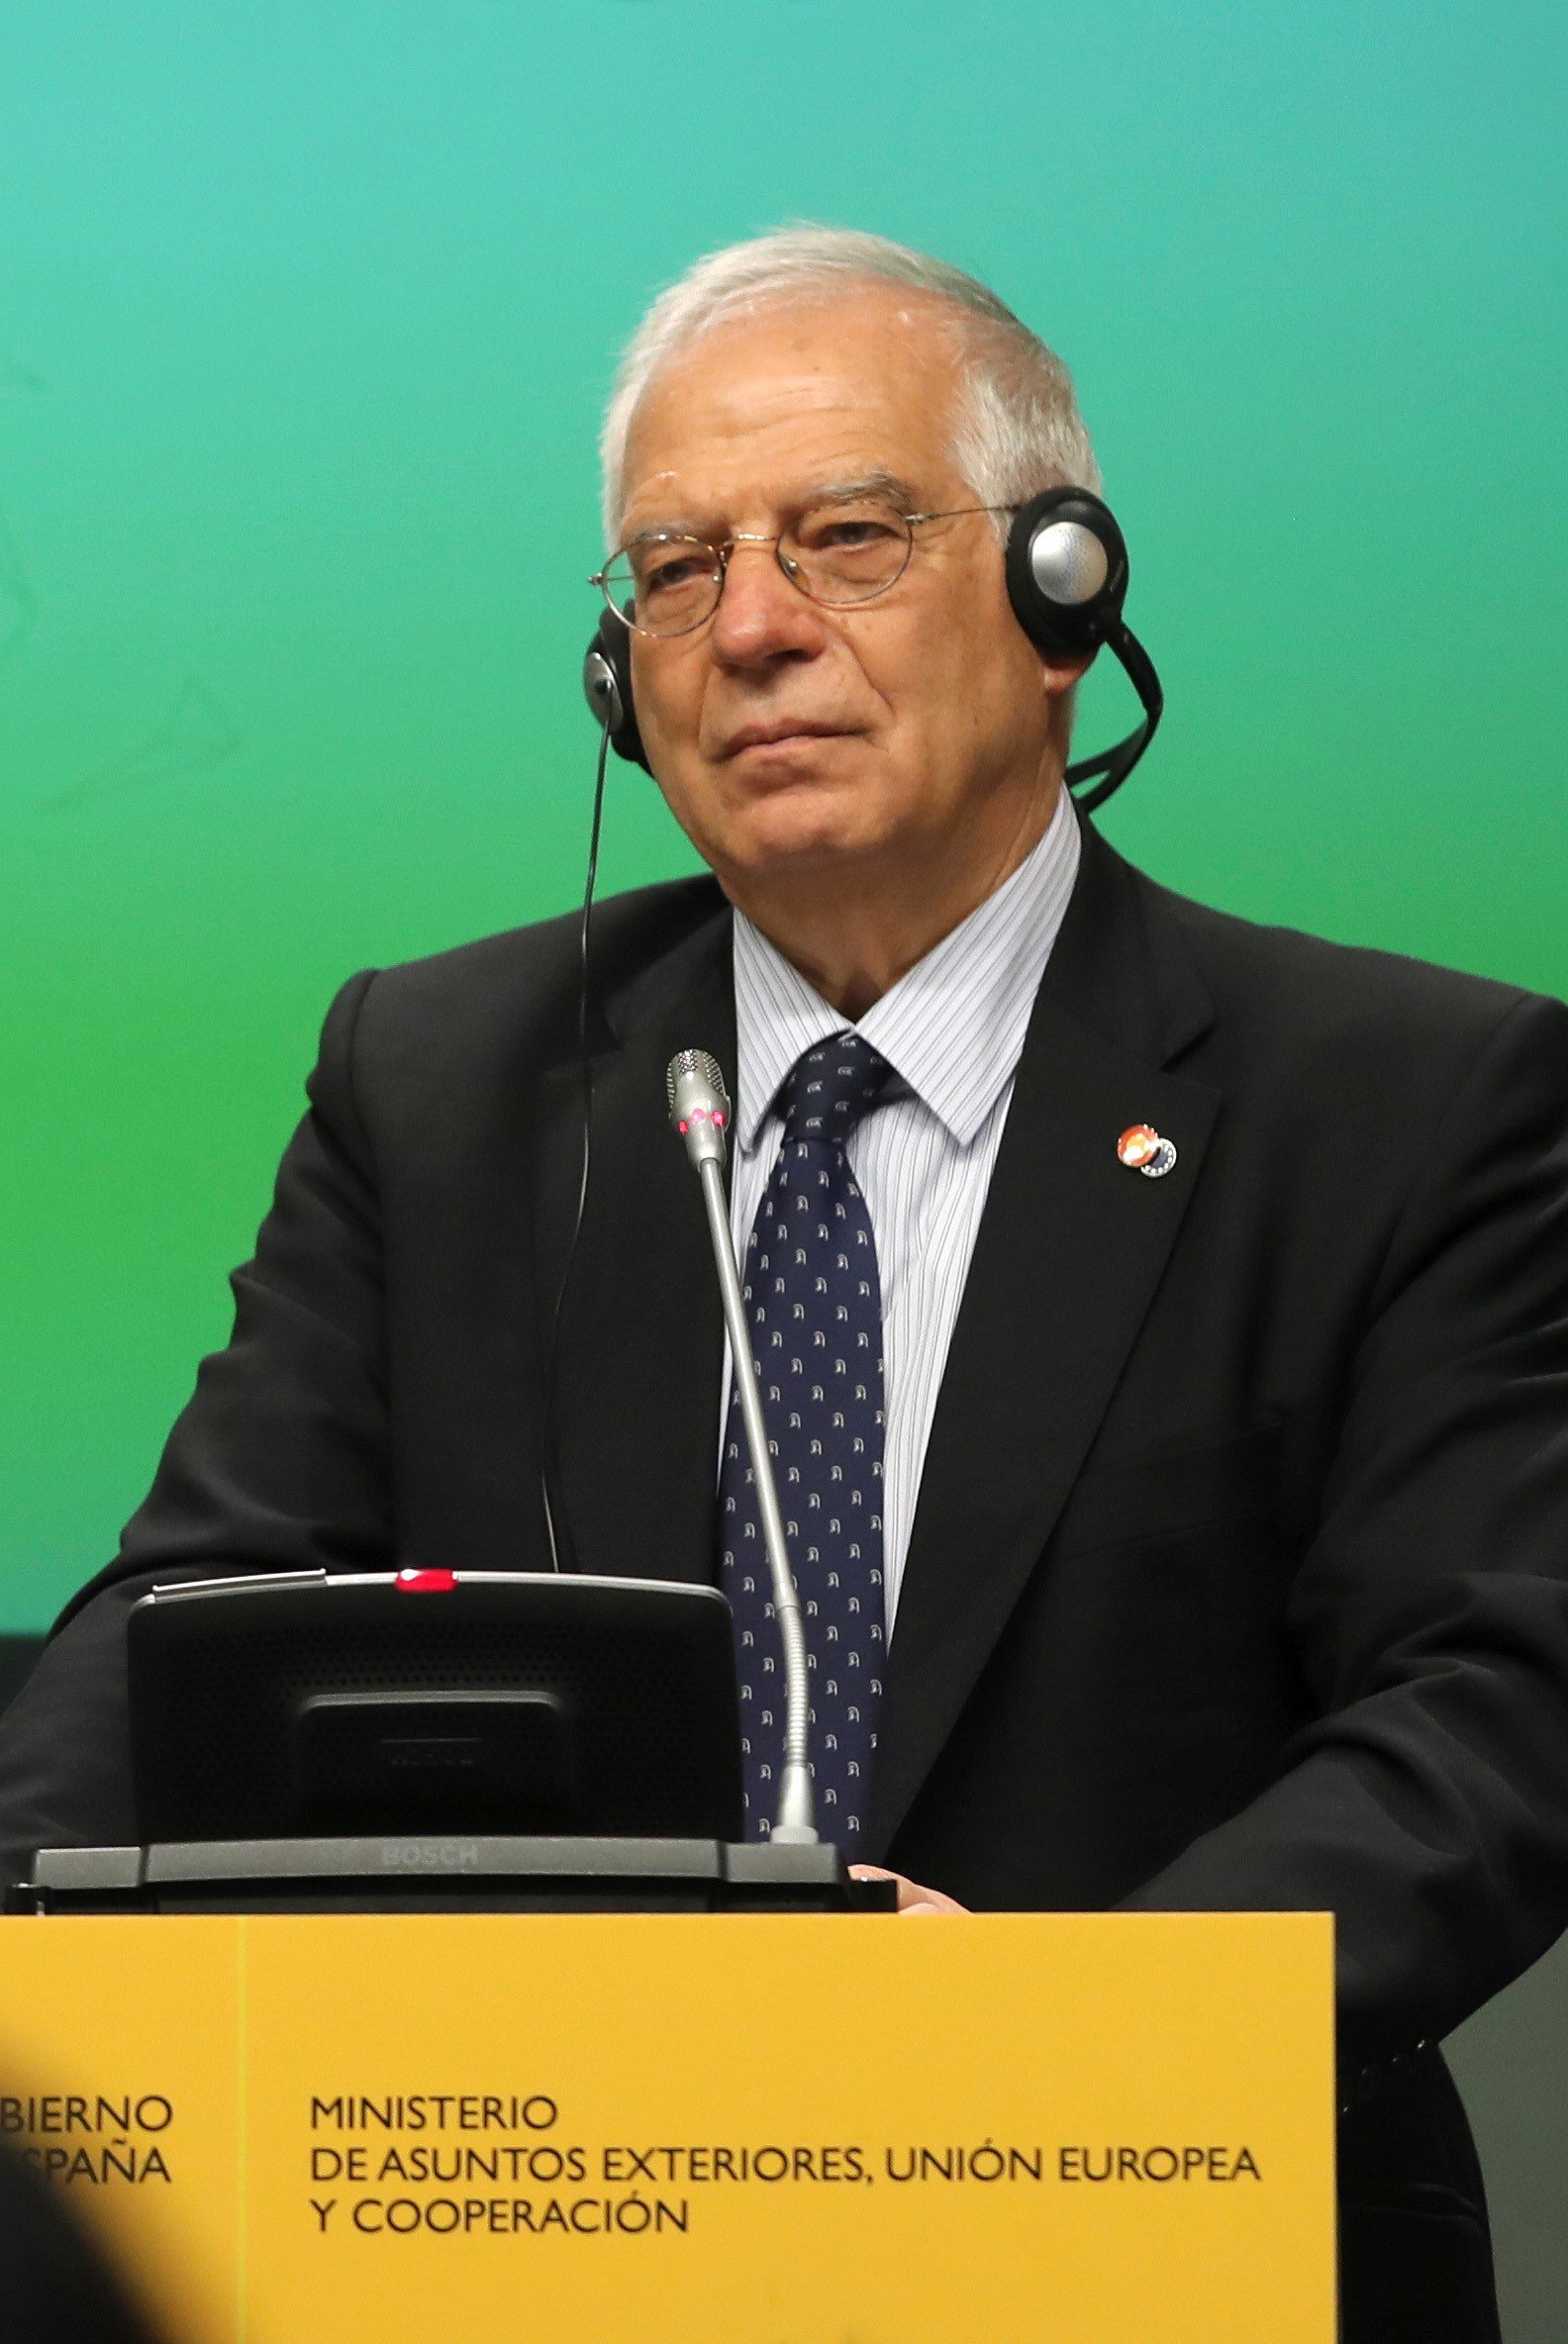 La CNMV multa a Borrell con 30.000 euros por vender acciones de Abengoa